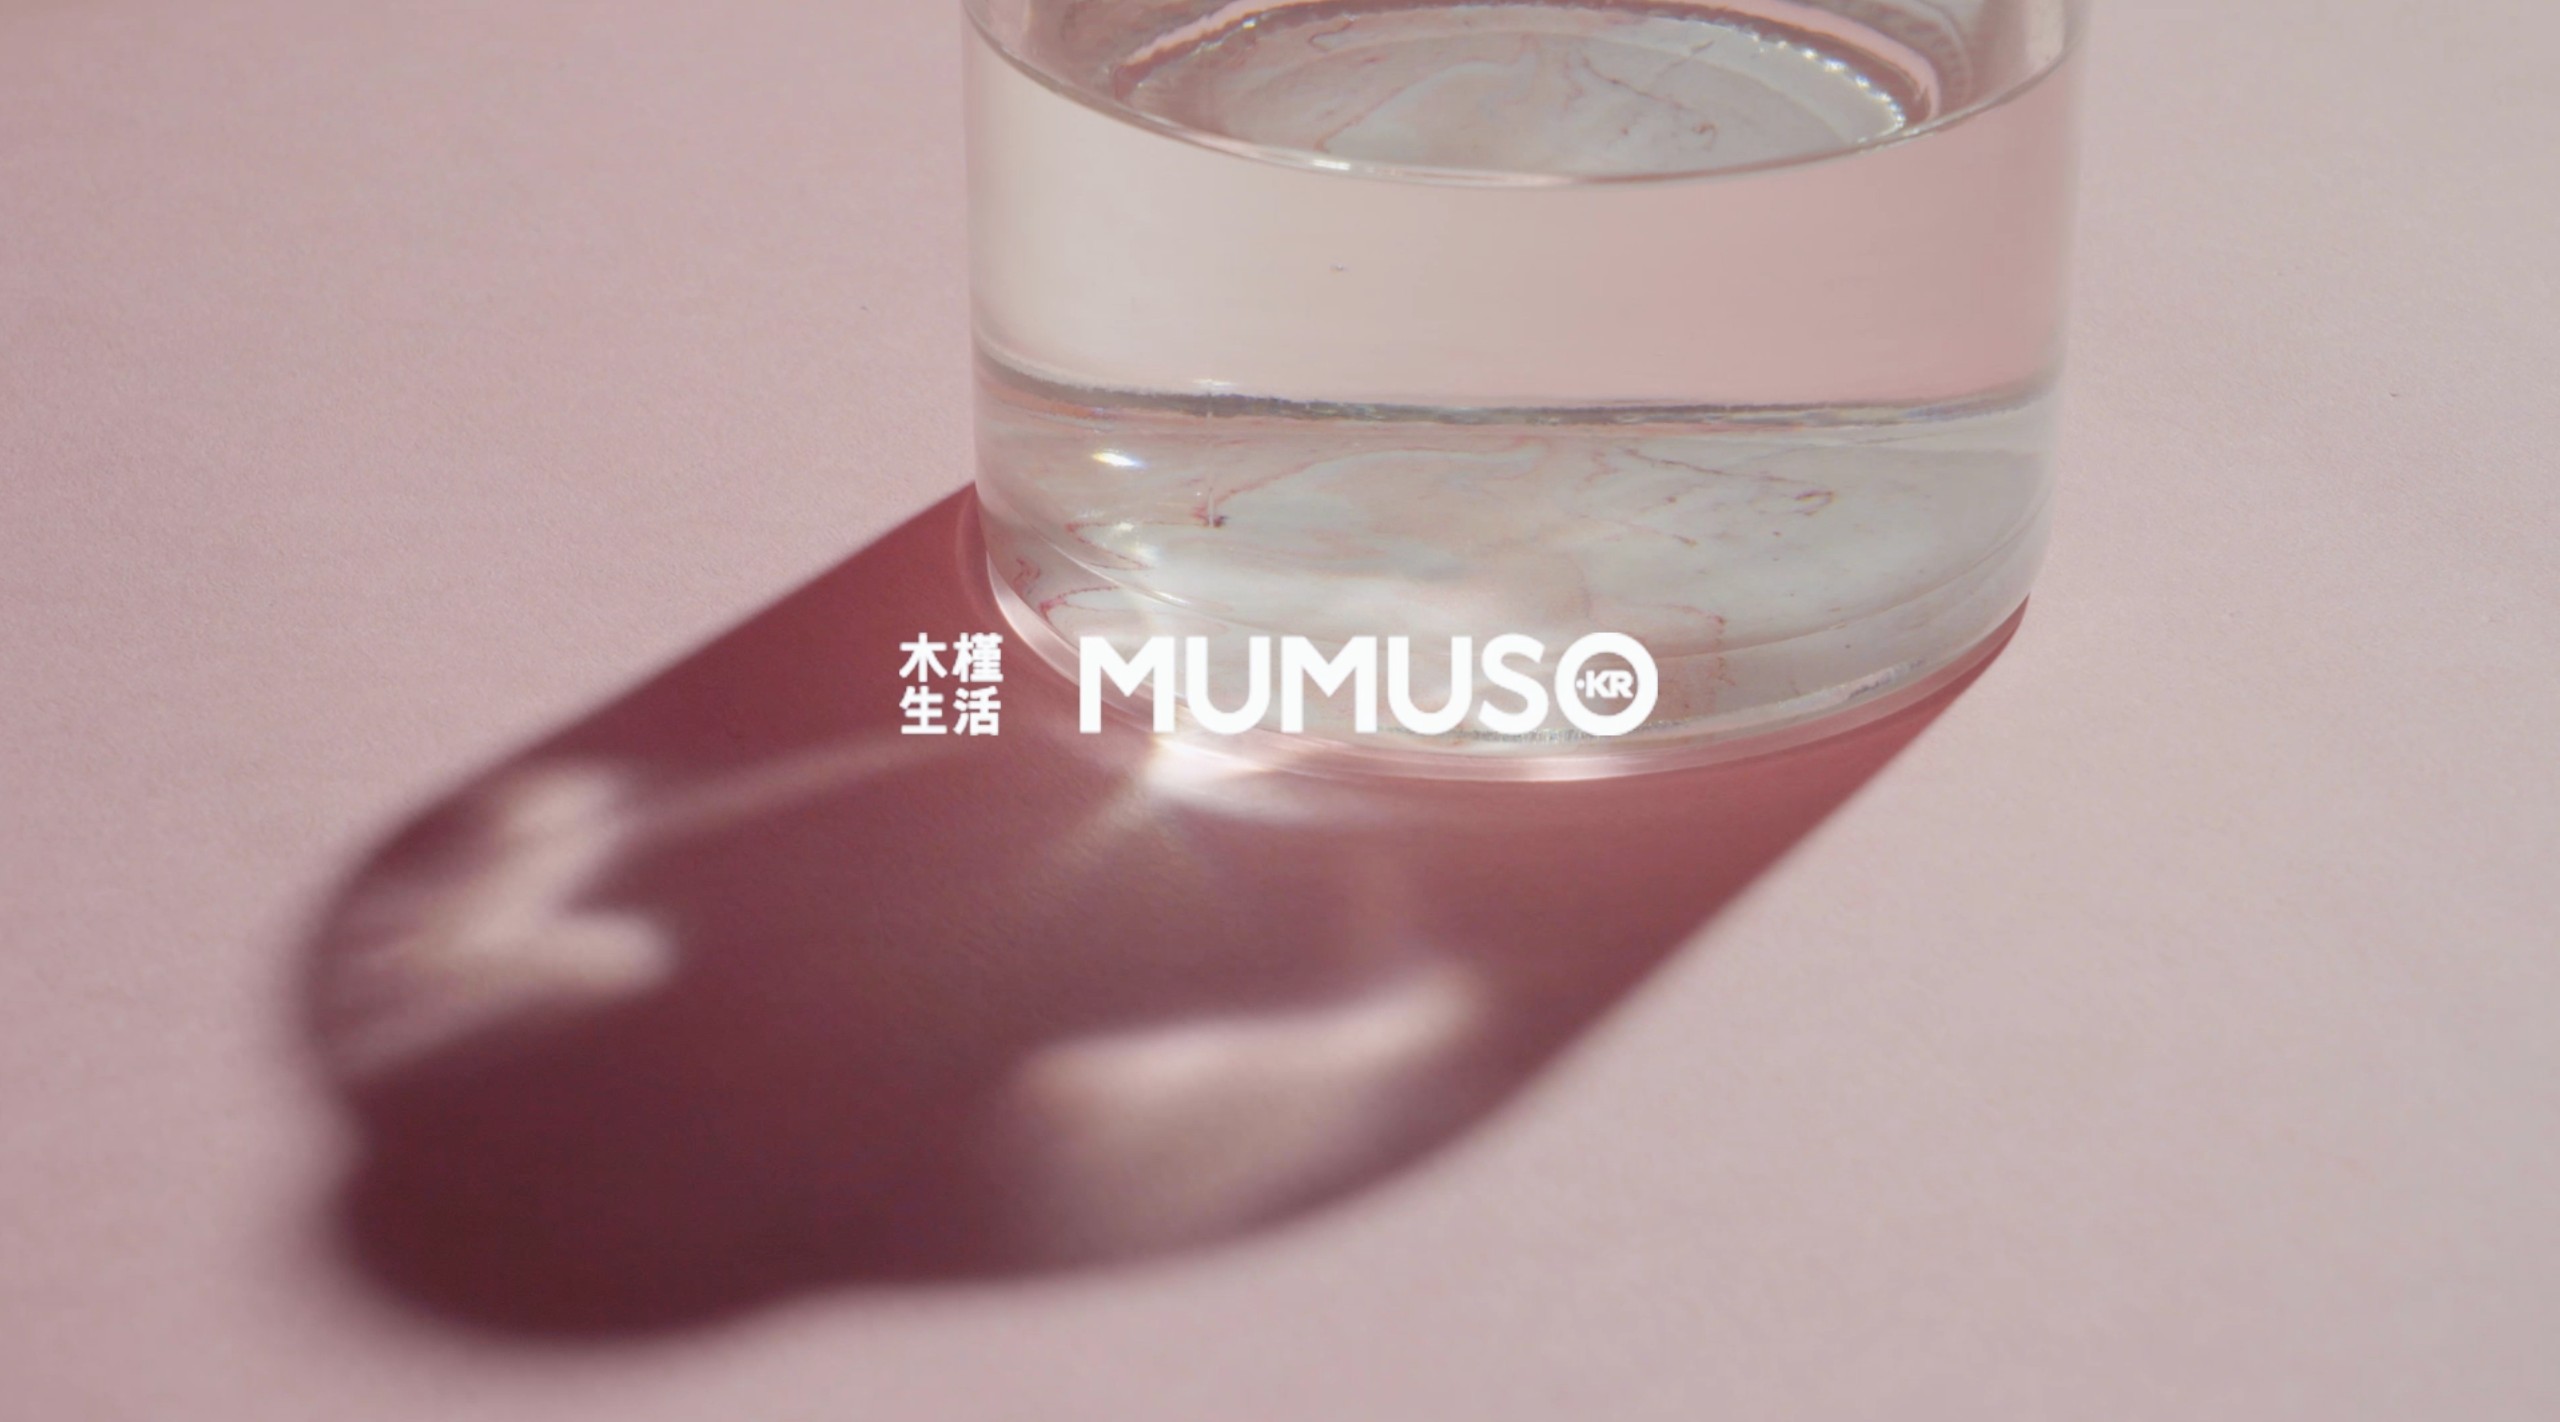 MUMUSO木槿生活系列新品产品形象片 